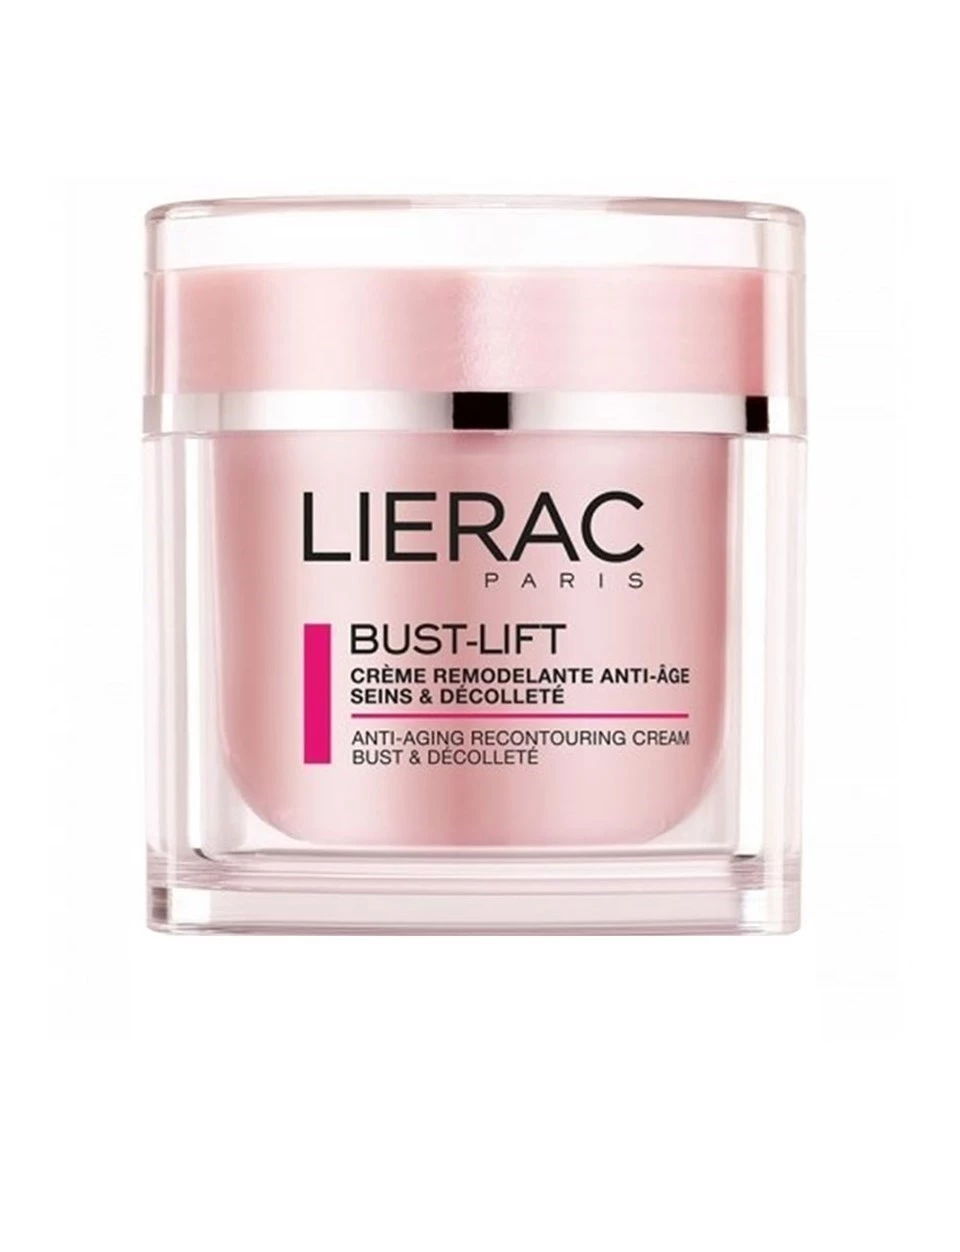 Lierac Bust Lift Creme Remodelante Anti Age Cream 75ml Göğüs ve Dekolte Bölgesi İçin